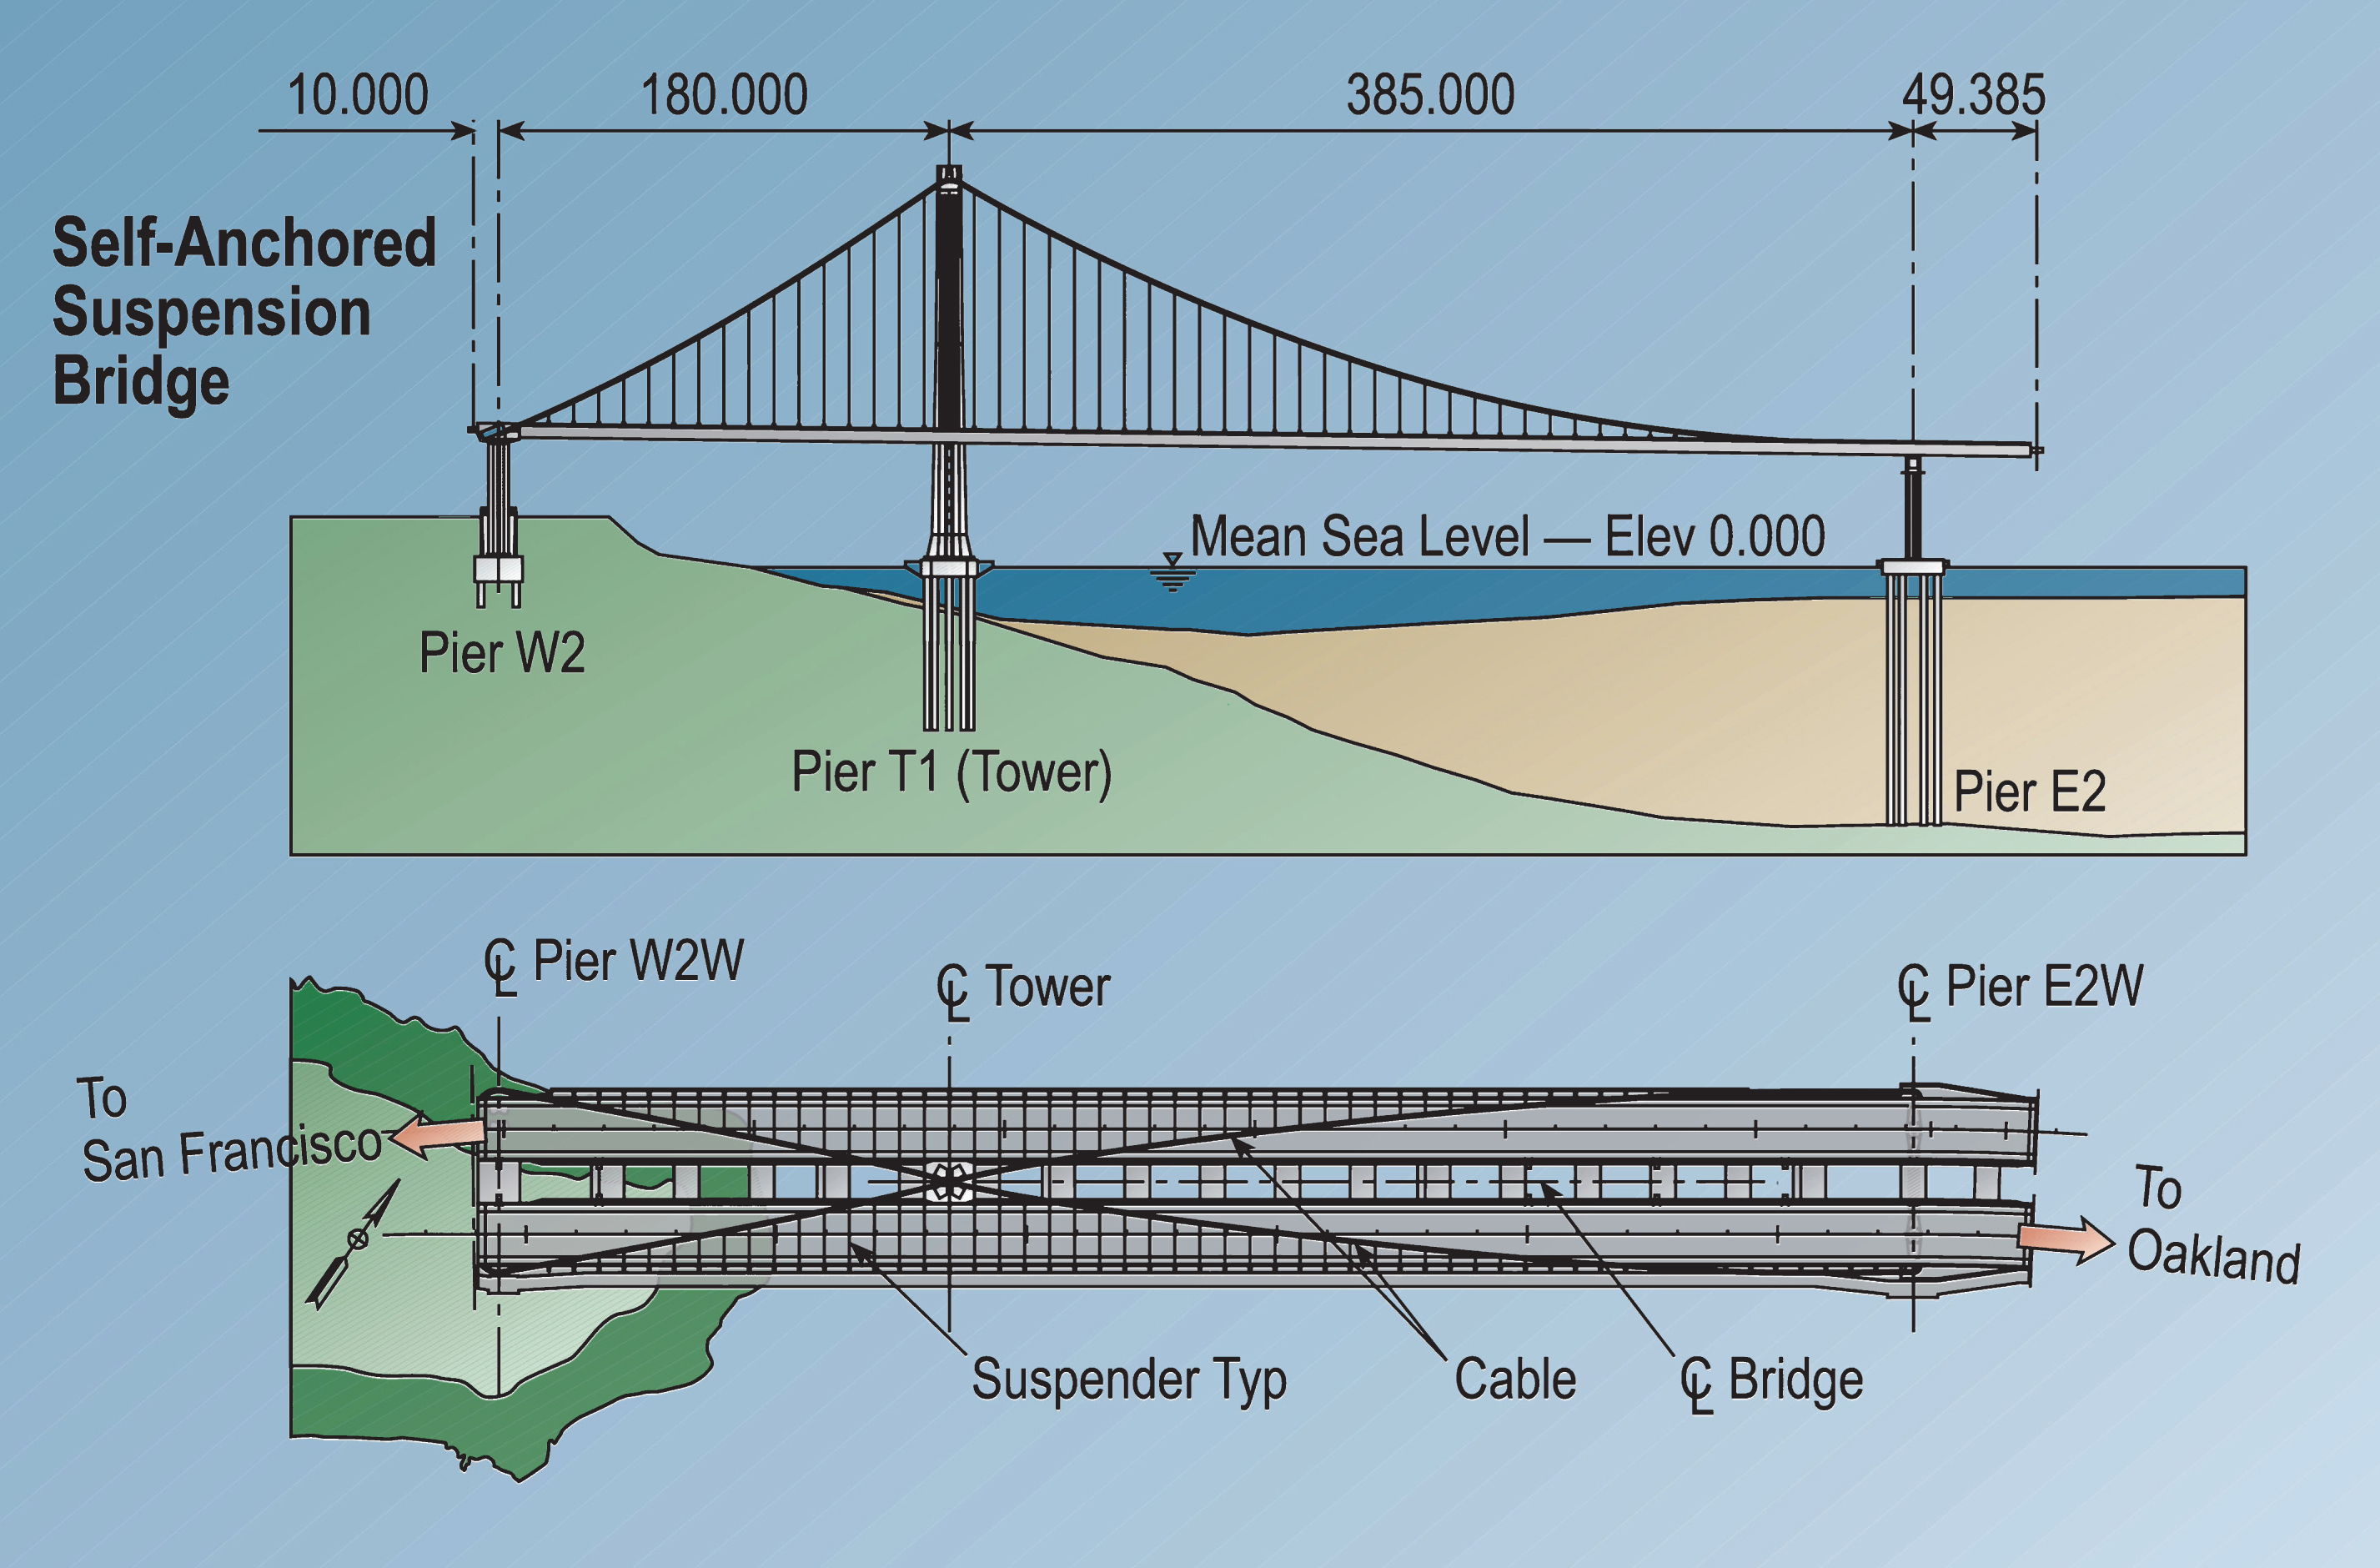 Self-anchored suspension span of the San Francisco-Oakland Bay bridge.